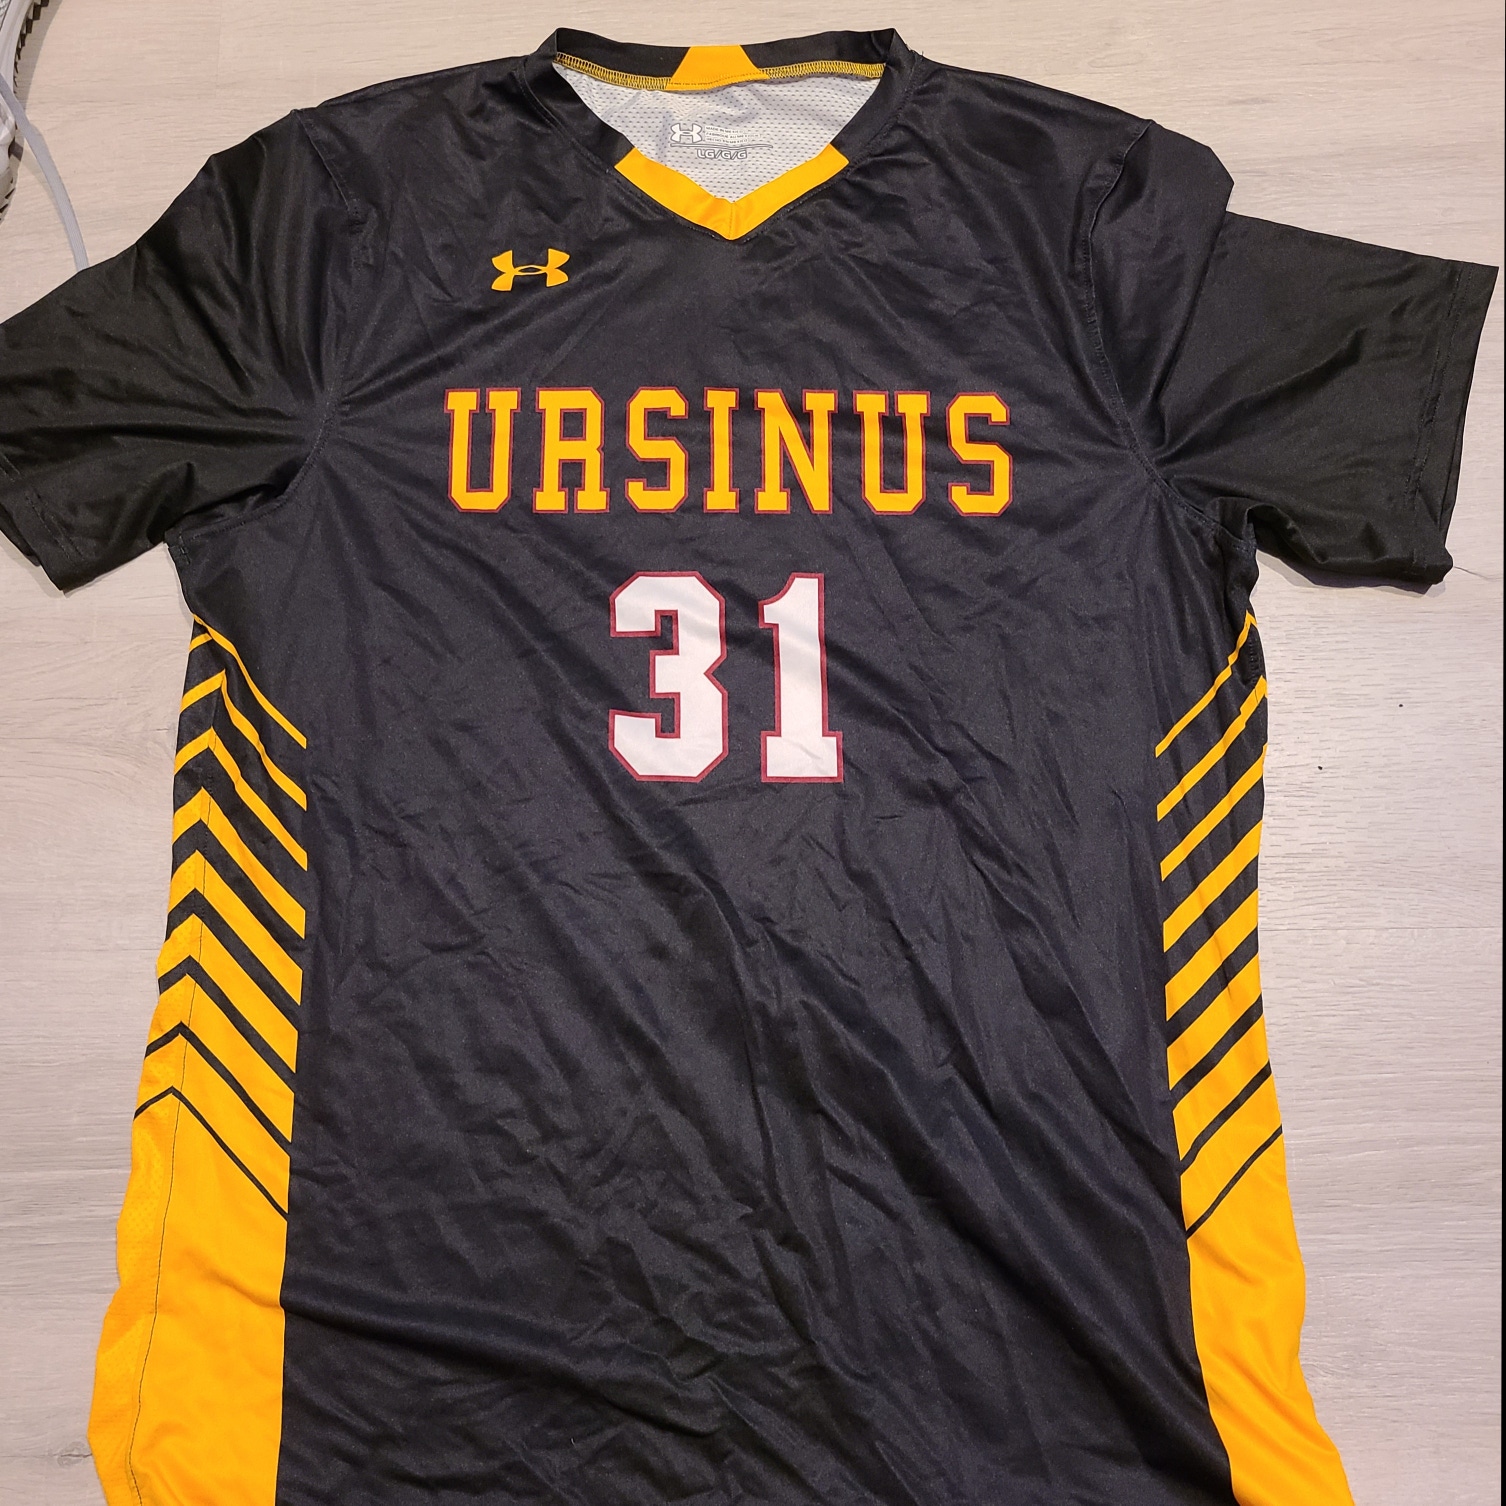 Ursinus College Lacrosse shooting shirt Black Used Large Under Armour Jersey